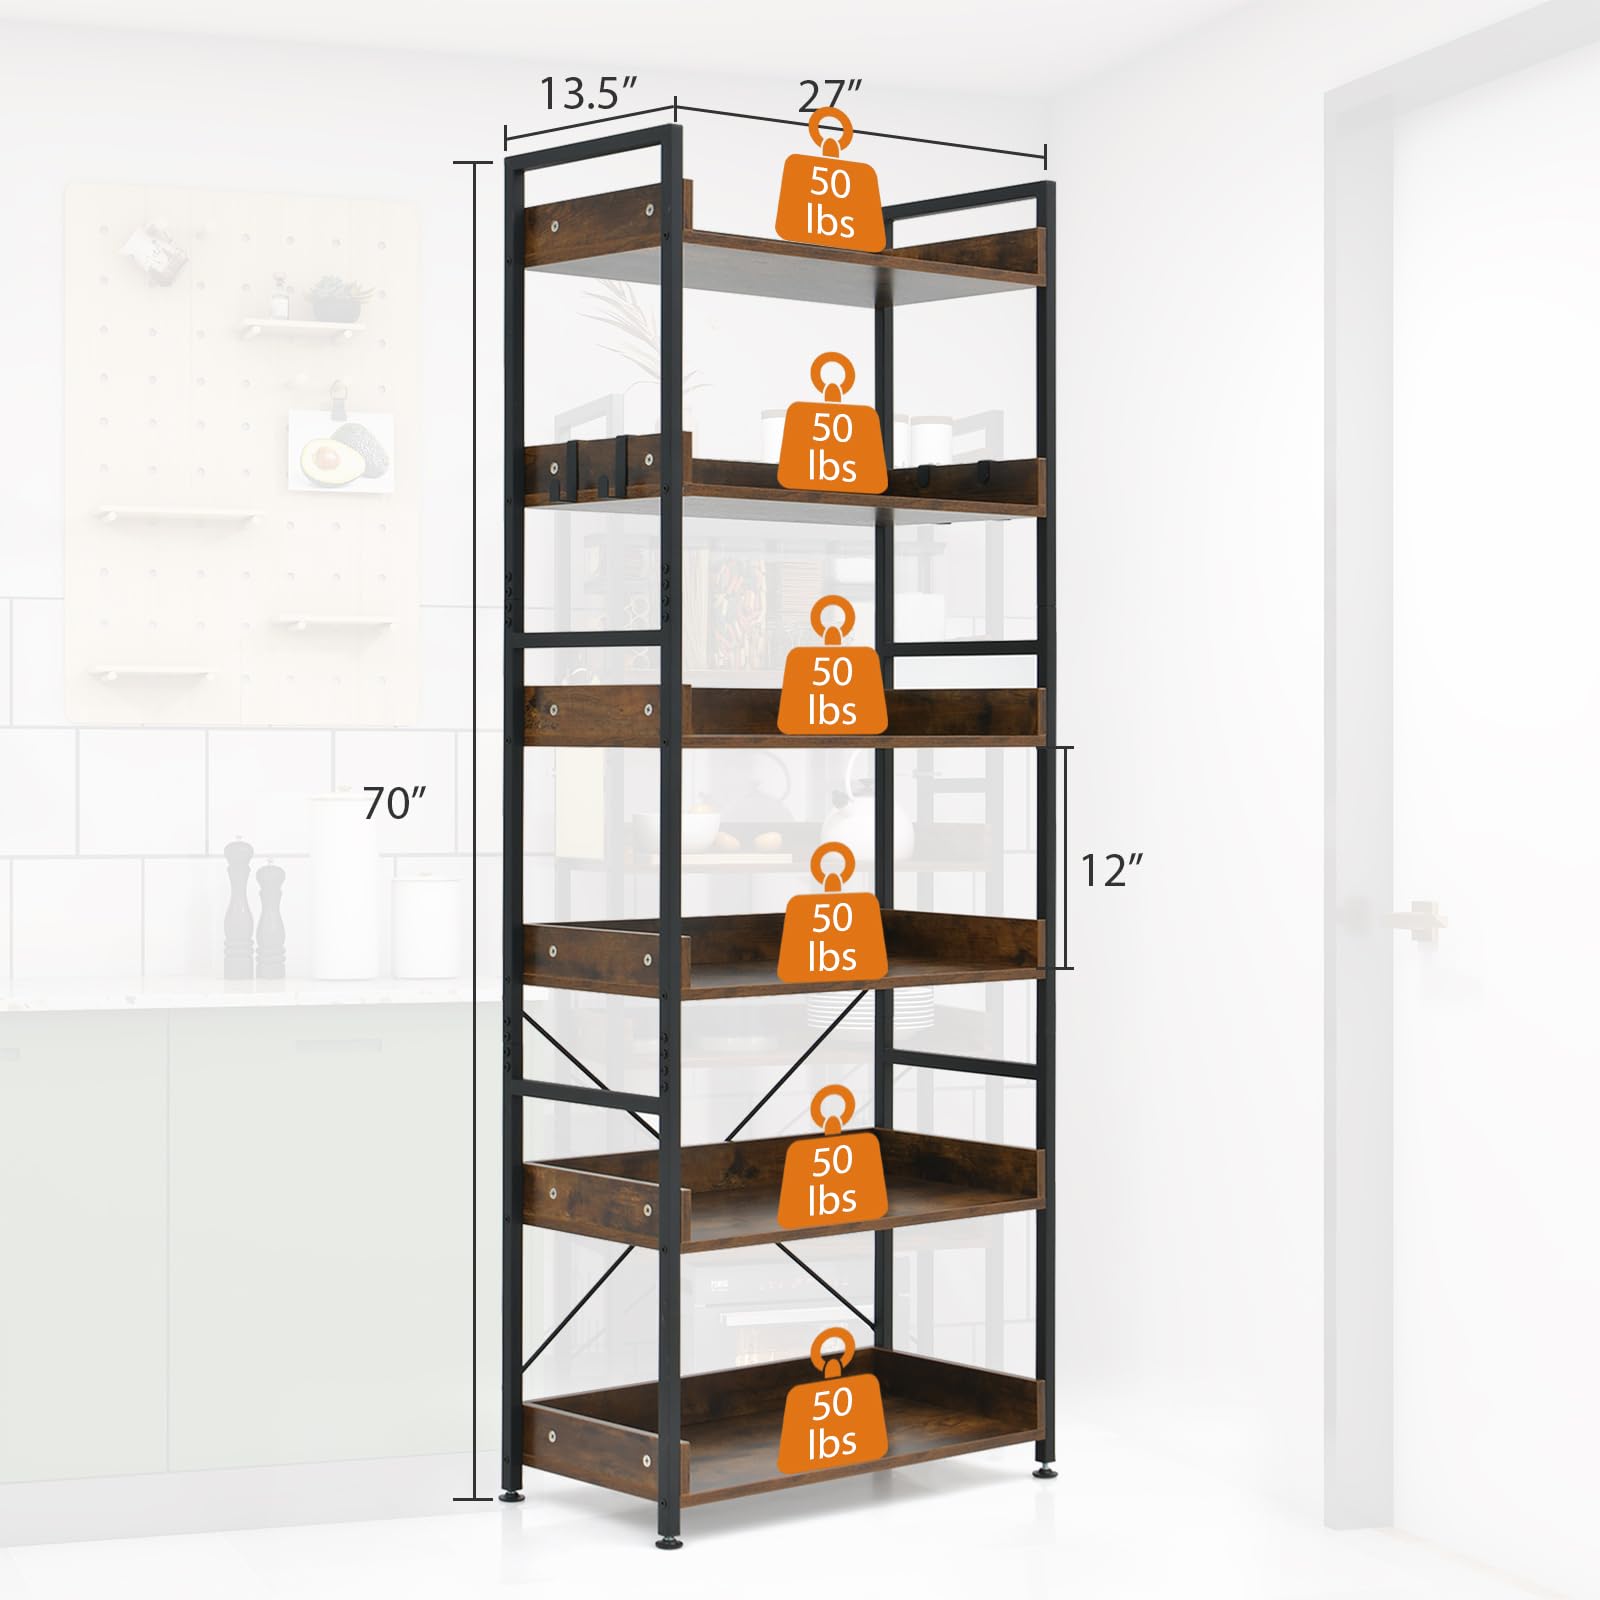 Giantex Industrial 6-Tier Bookshelf, 70" Tall Freestanding Storage Display Shelf with 4 Hooks